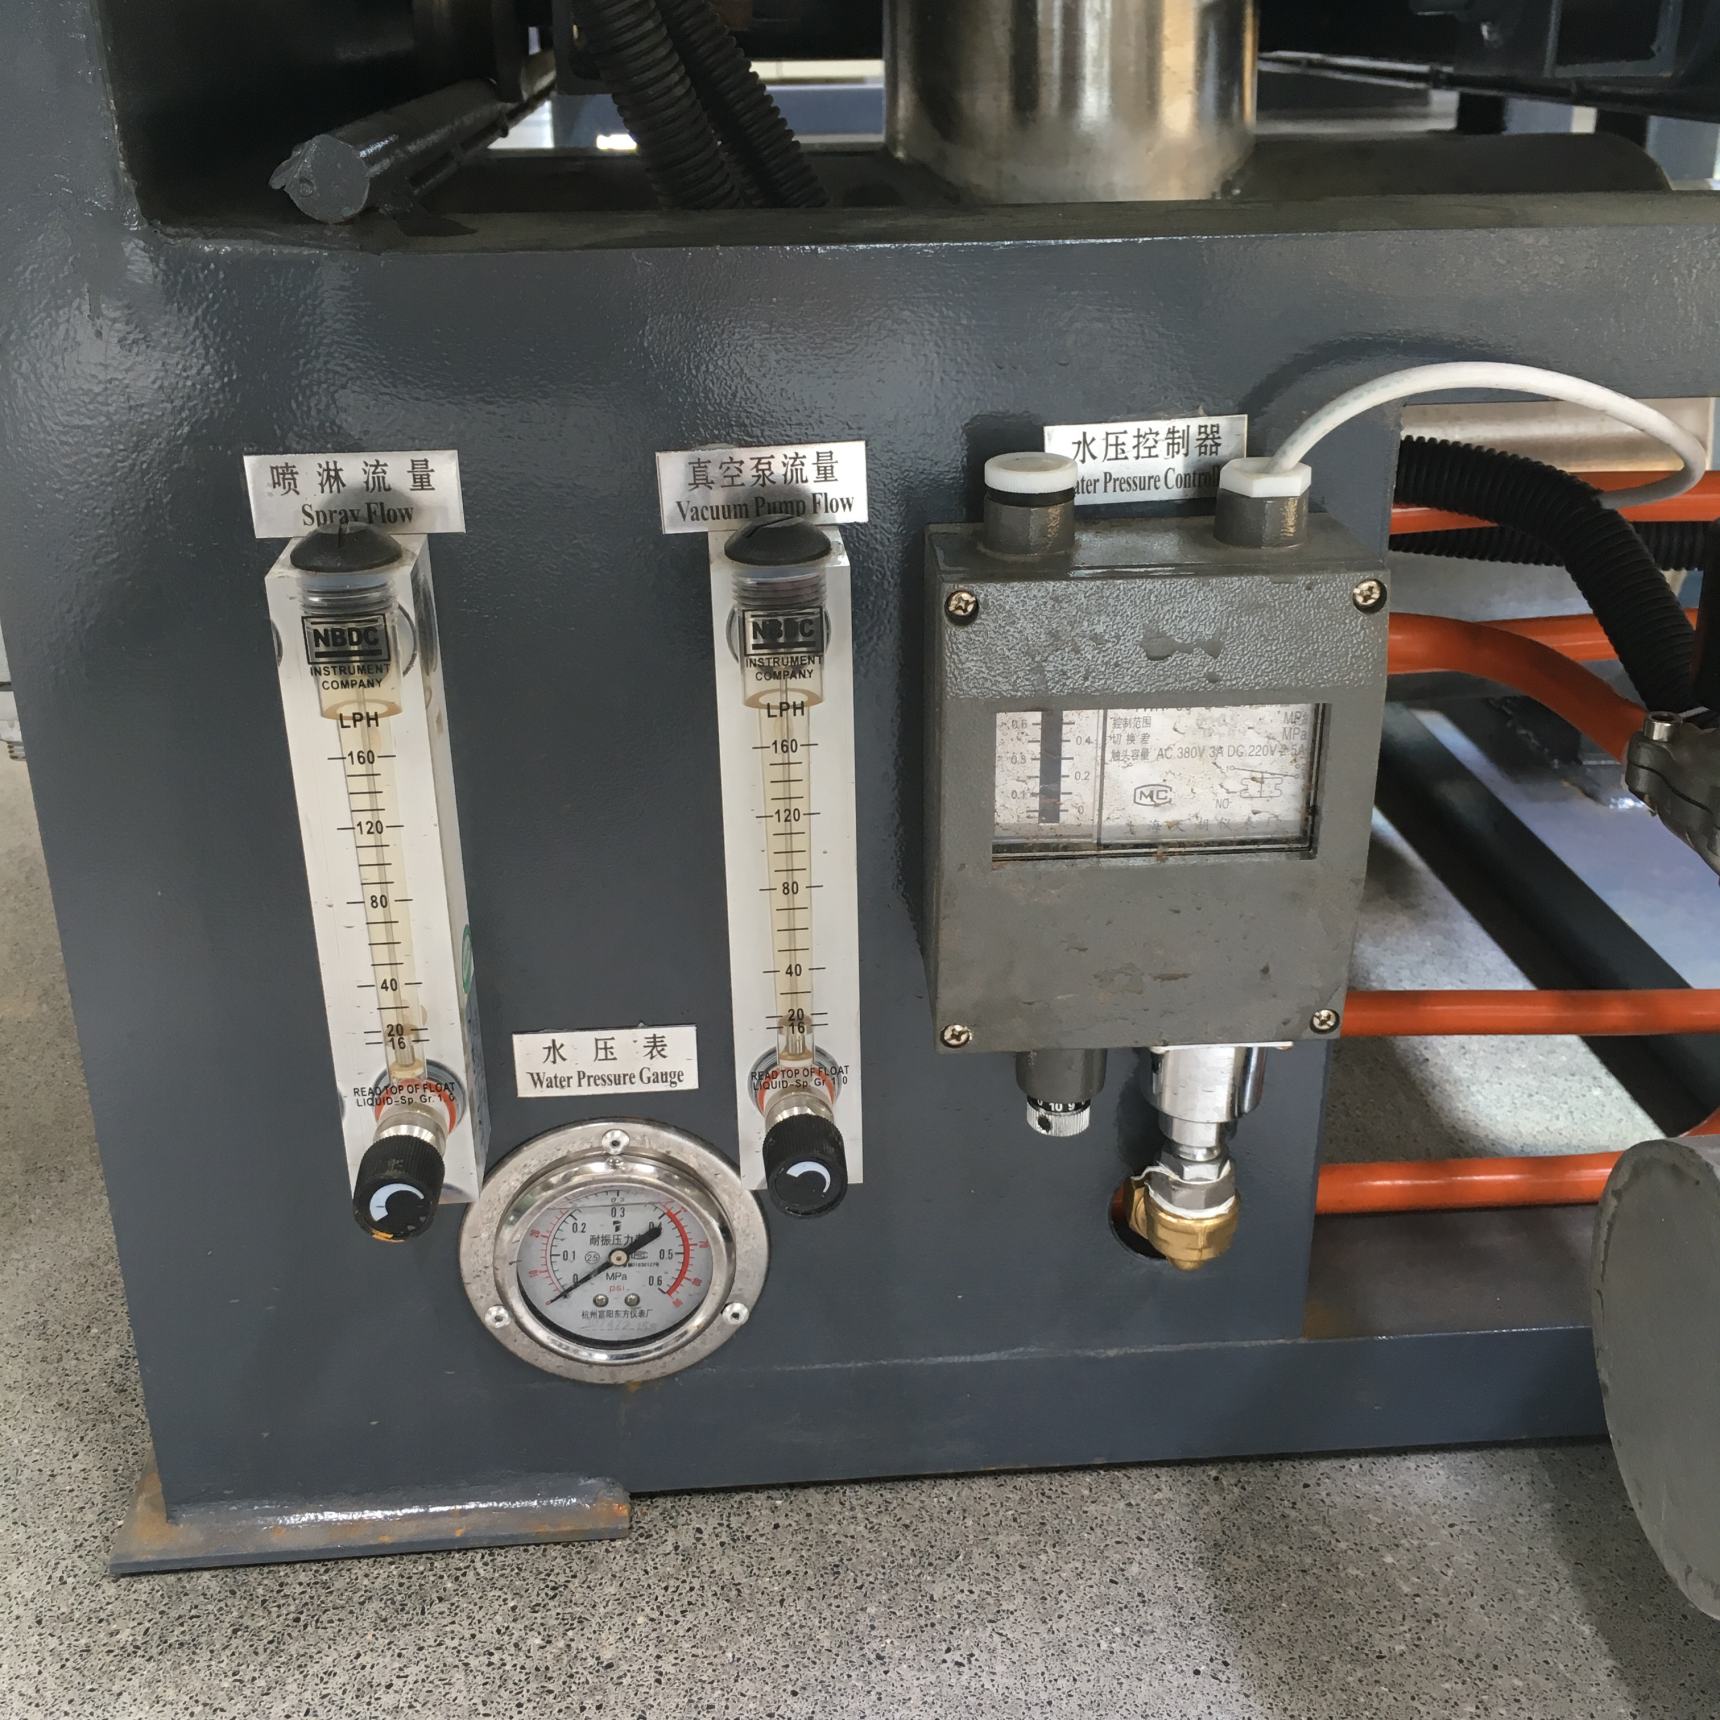 500 centigrade electric pyrolysis vacuum furnace in lab